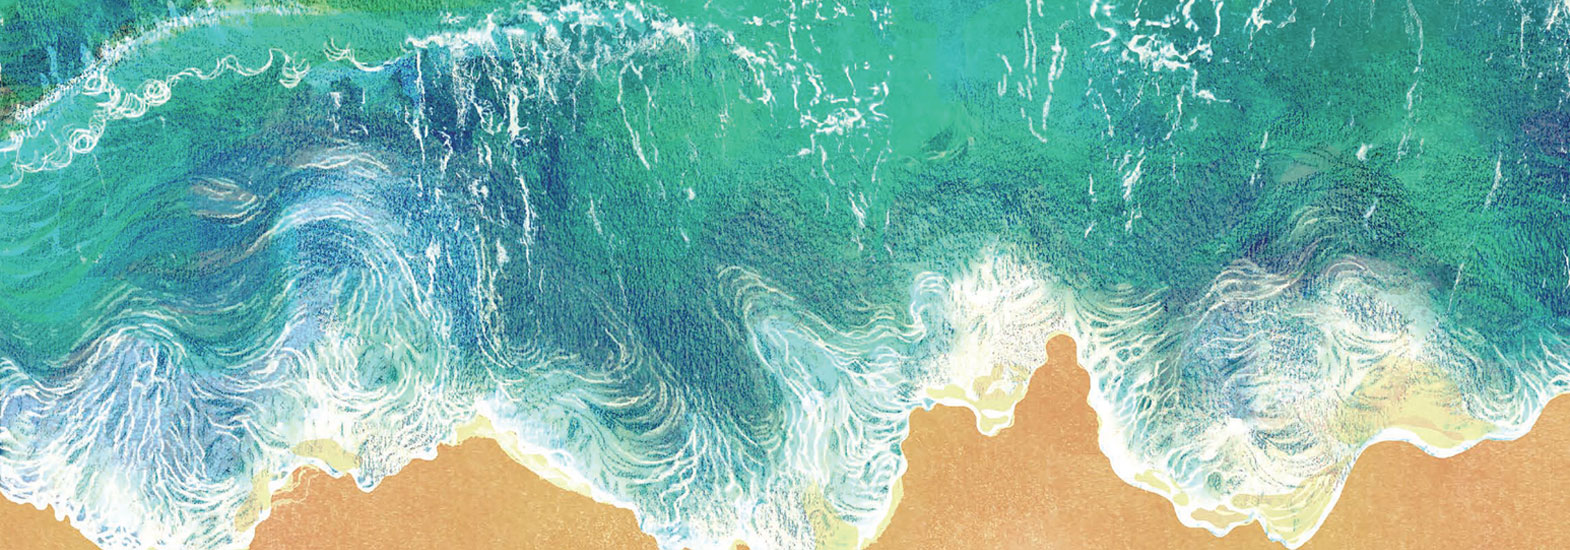 Illustration of waves breaking on sand from The Ocean Handbook